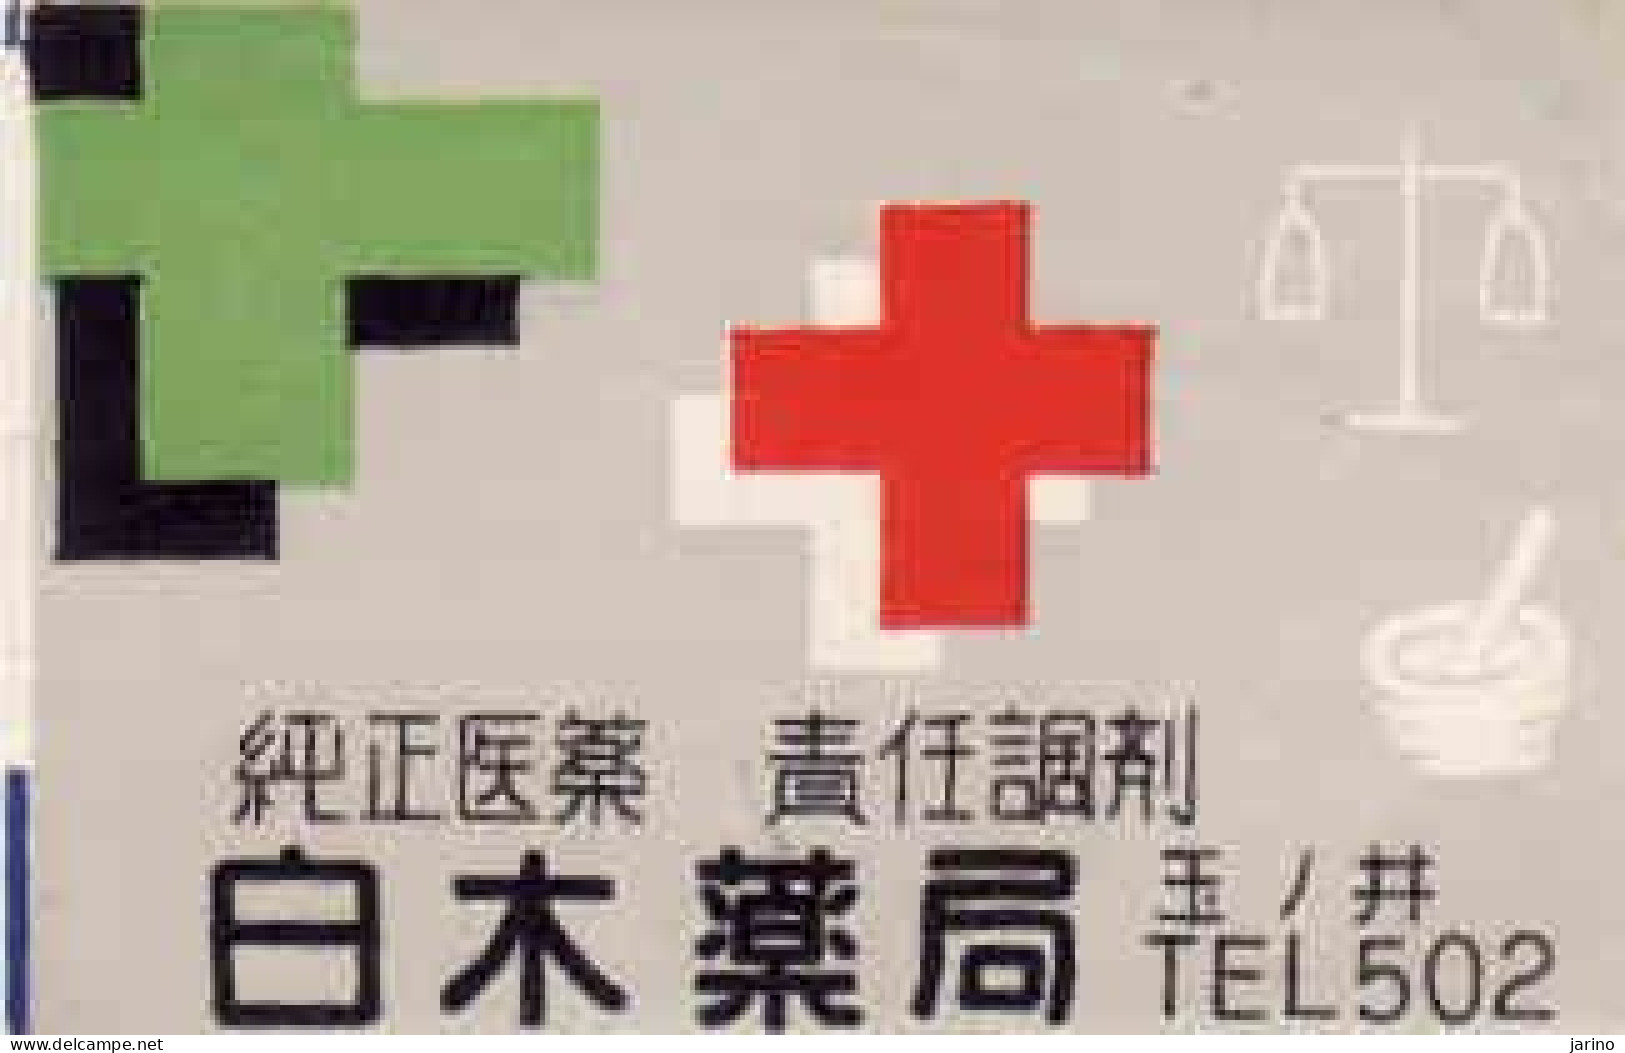 Japan Matchbox Labels, Red Cross, Scales, Pharmacy - Zündholzschachteletiketten